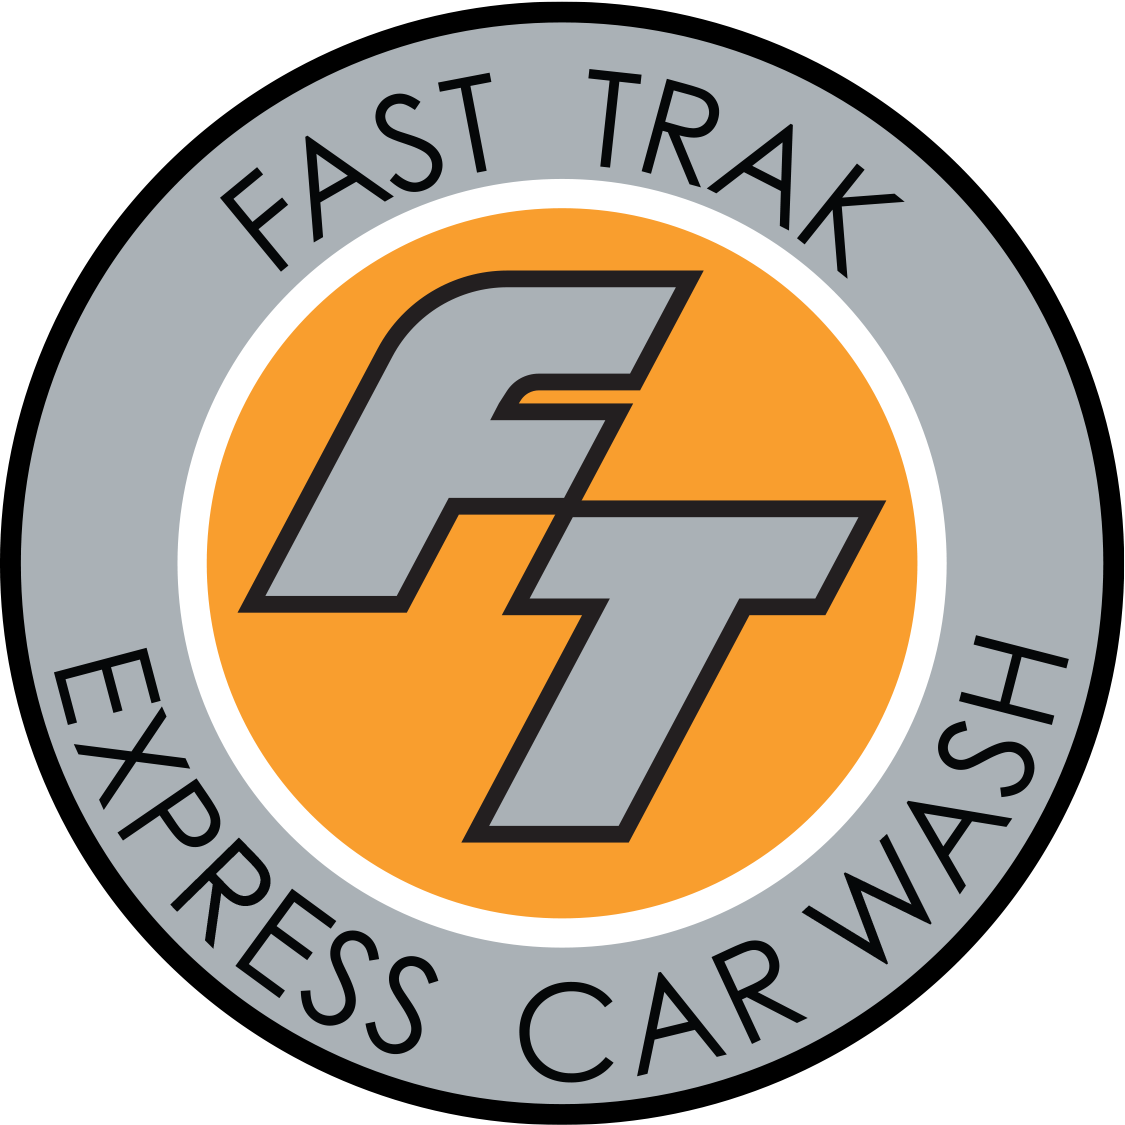 Fast Trak Carwash logo